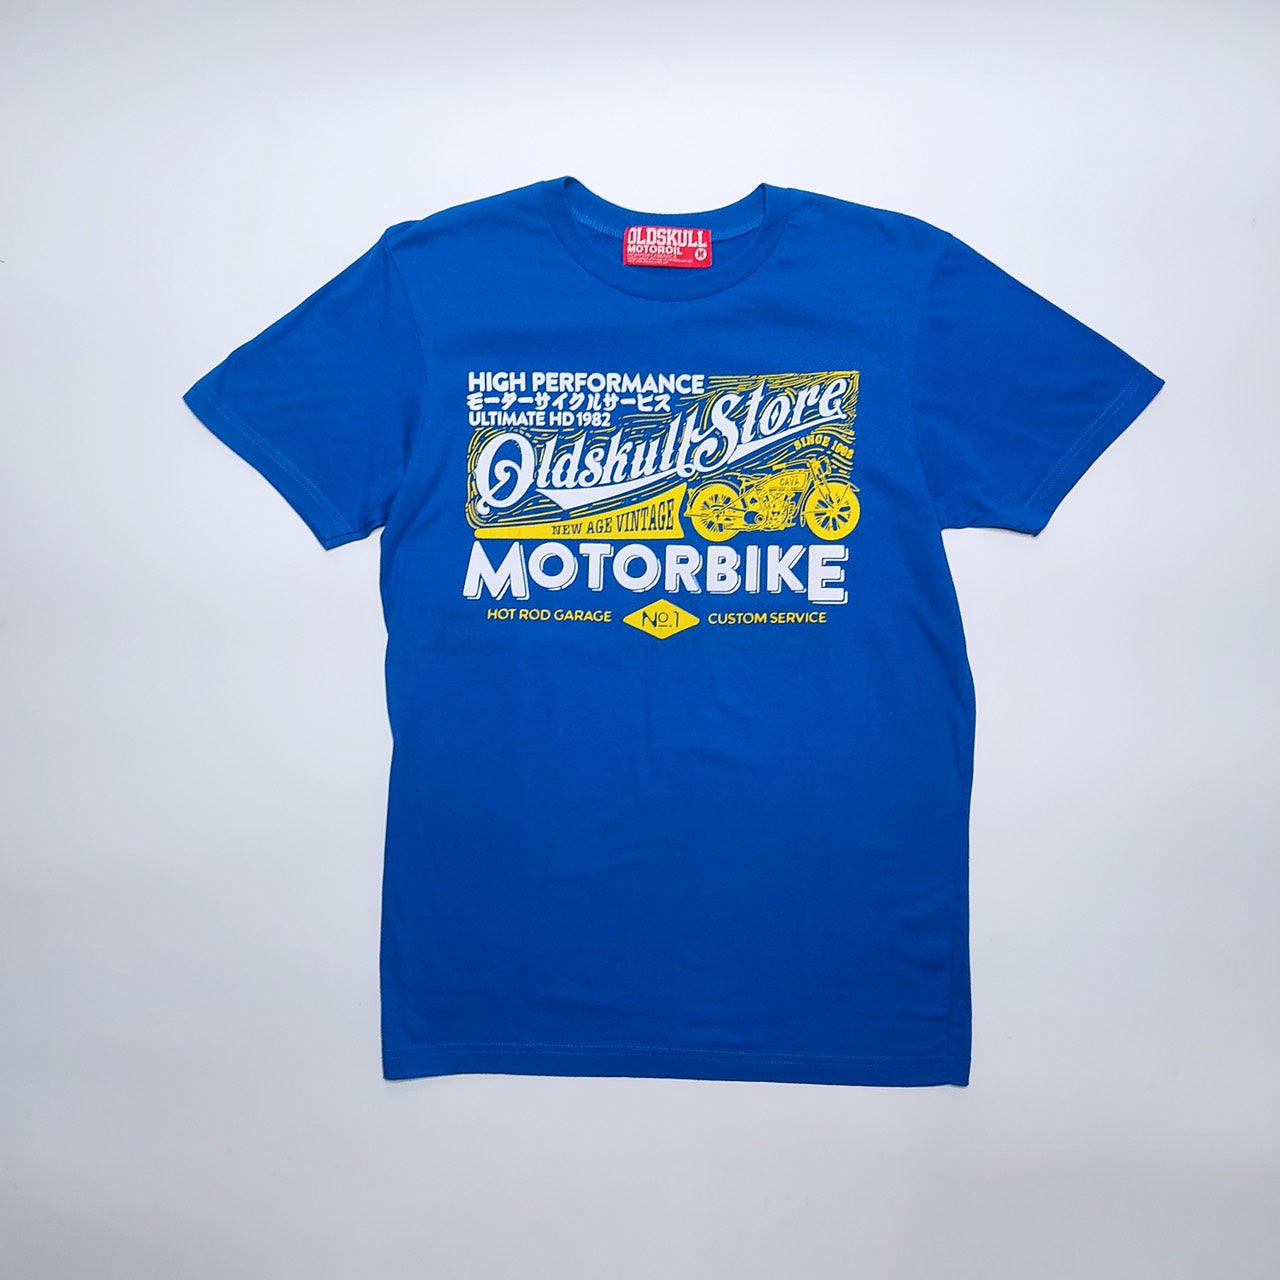 Oldskull t-shirt store, t-shirt for everyday wear, online selected